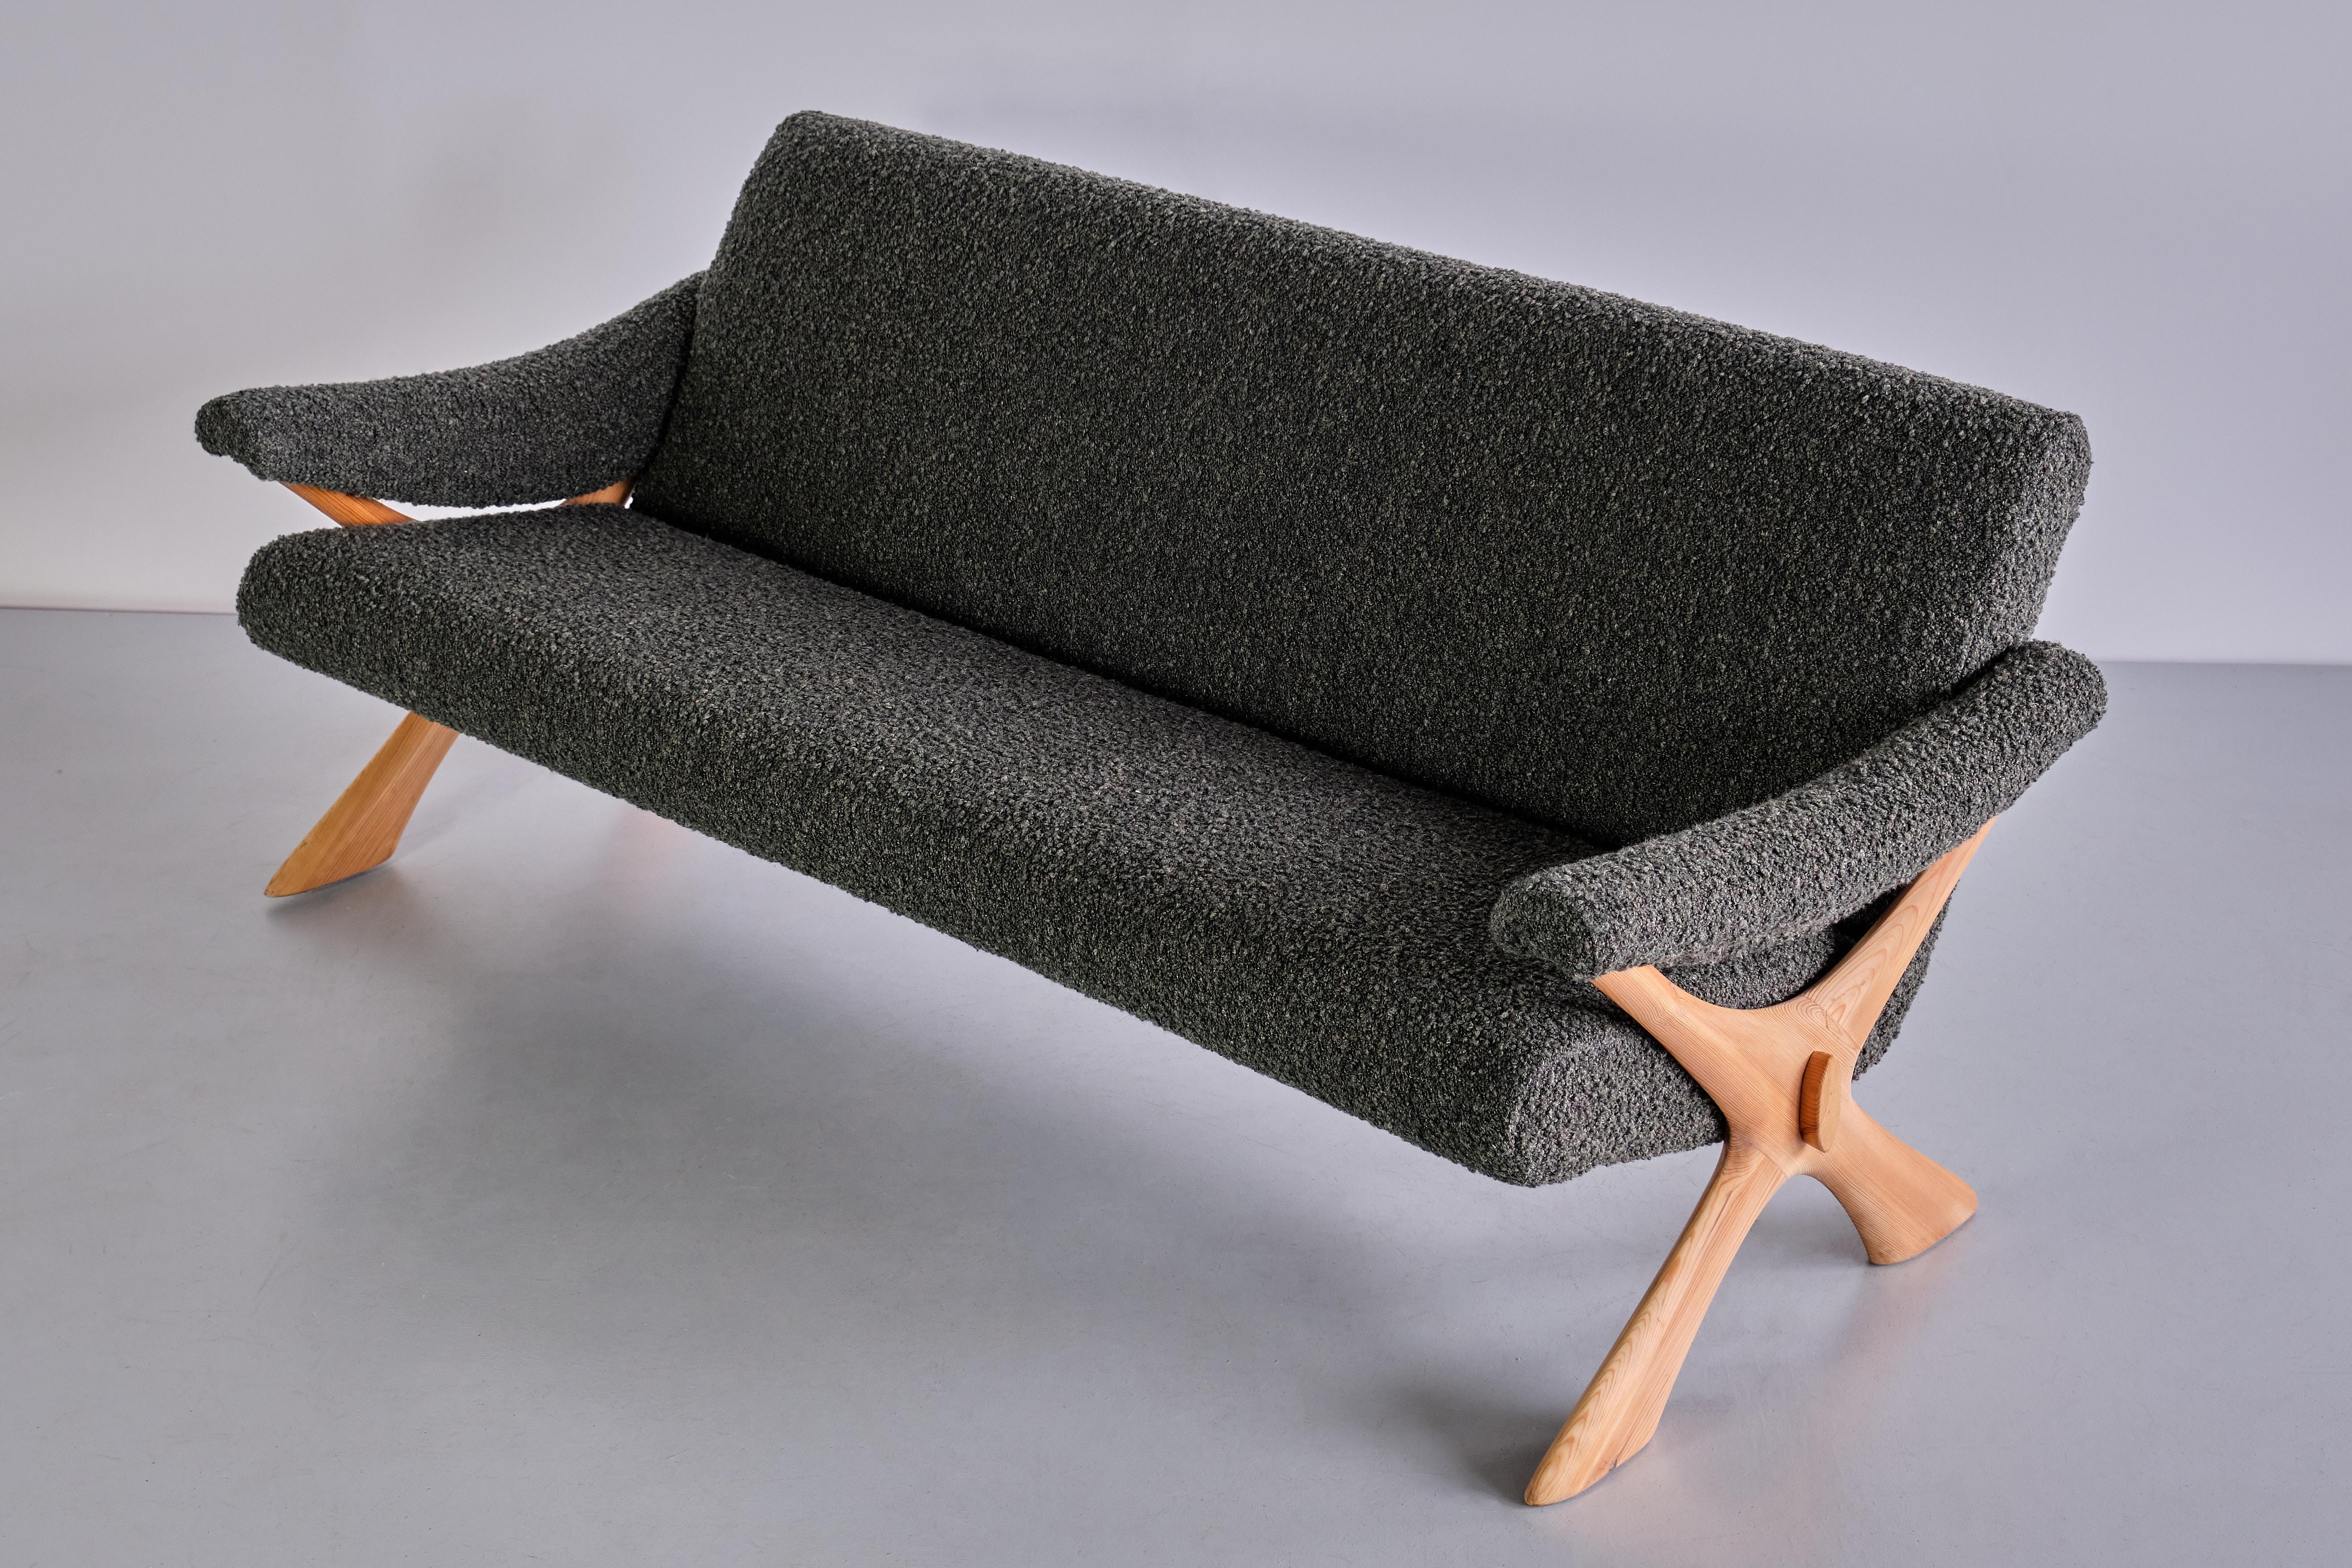 Rare Fredrik Schriever-Abeln Sofa in Pine and Dark Green Bouclé, Sweden, 1960s For Sale 8